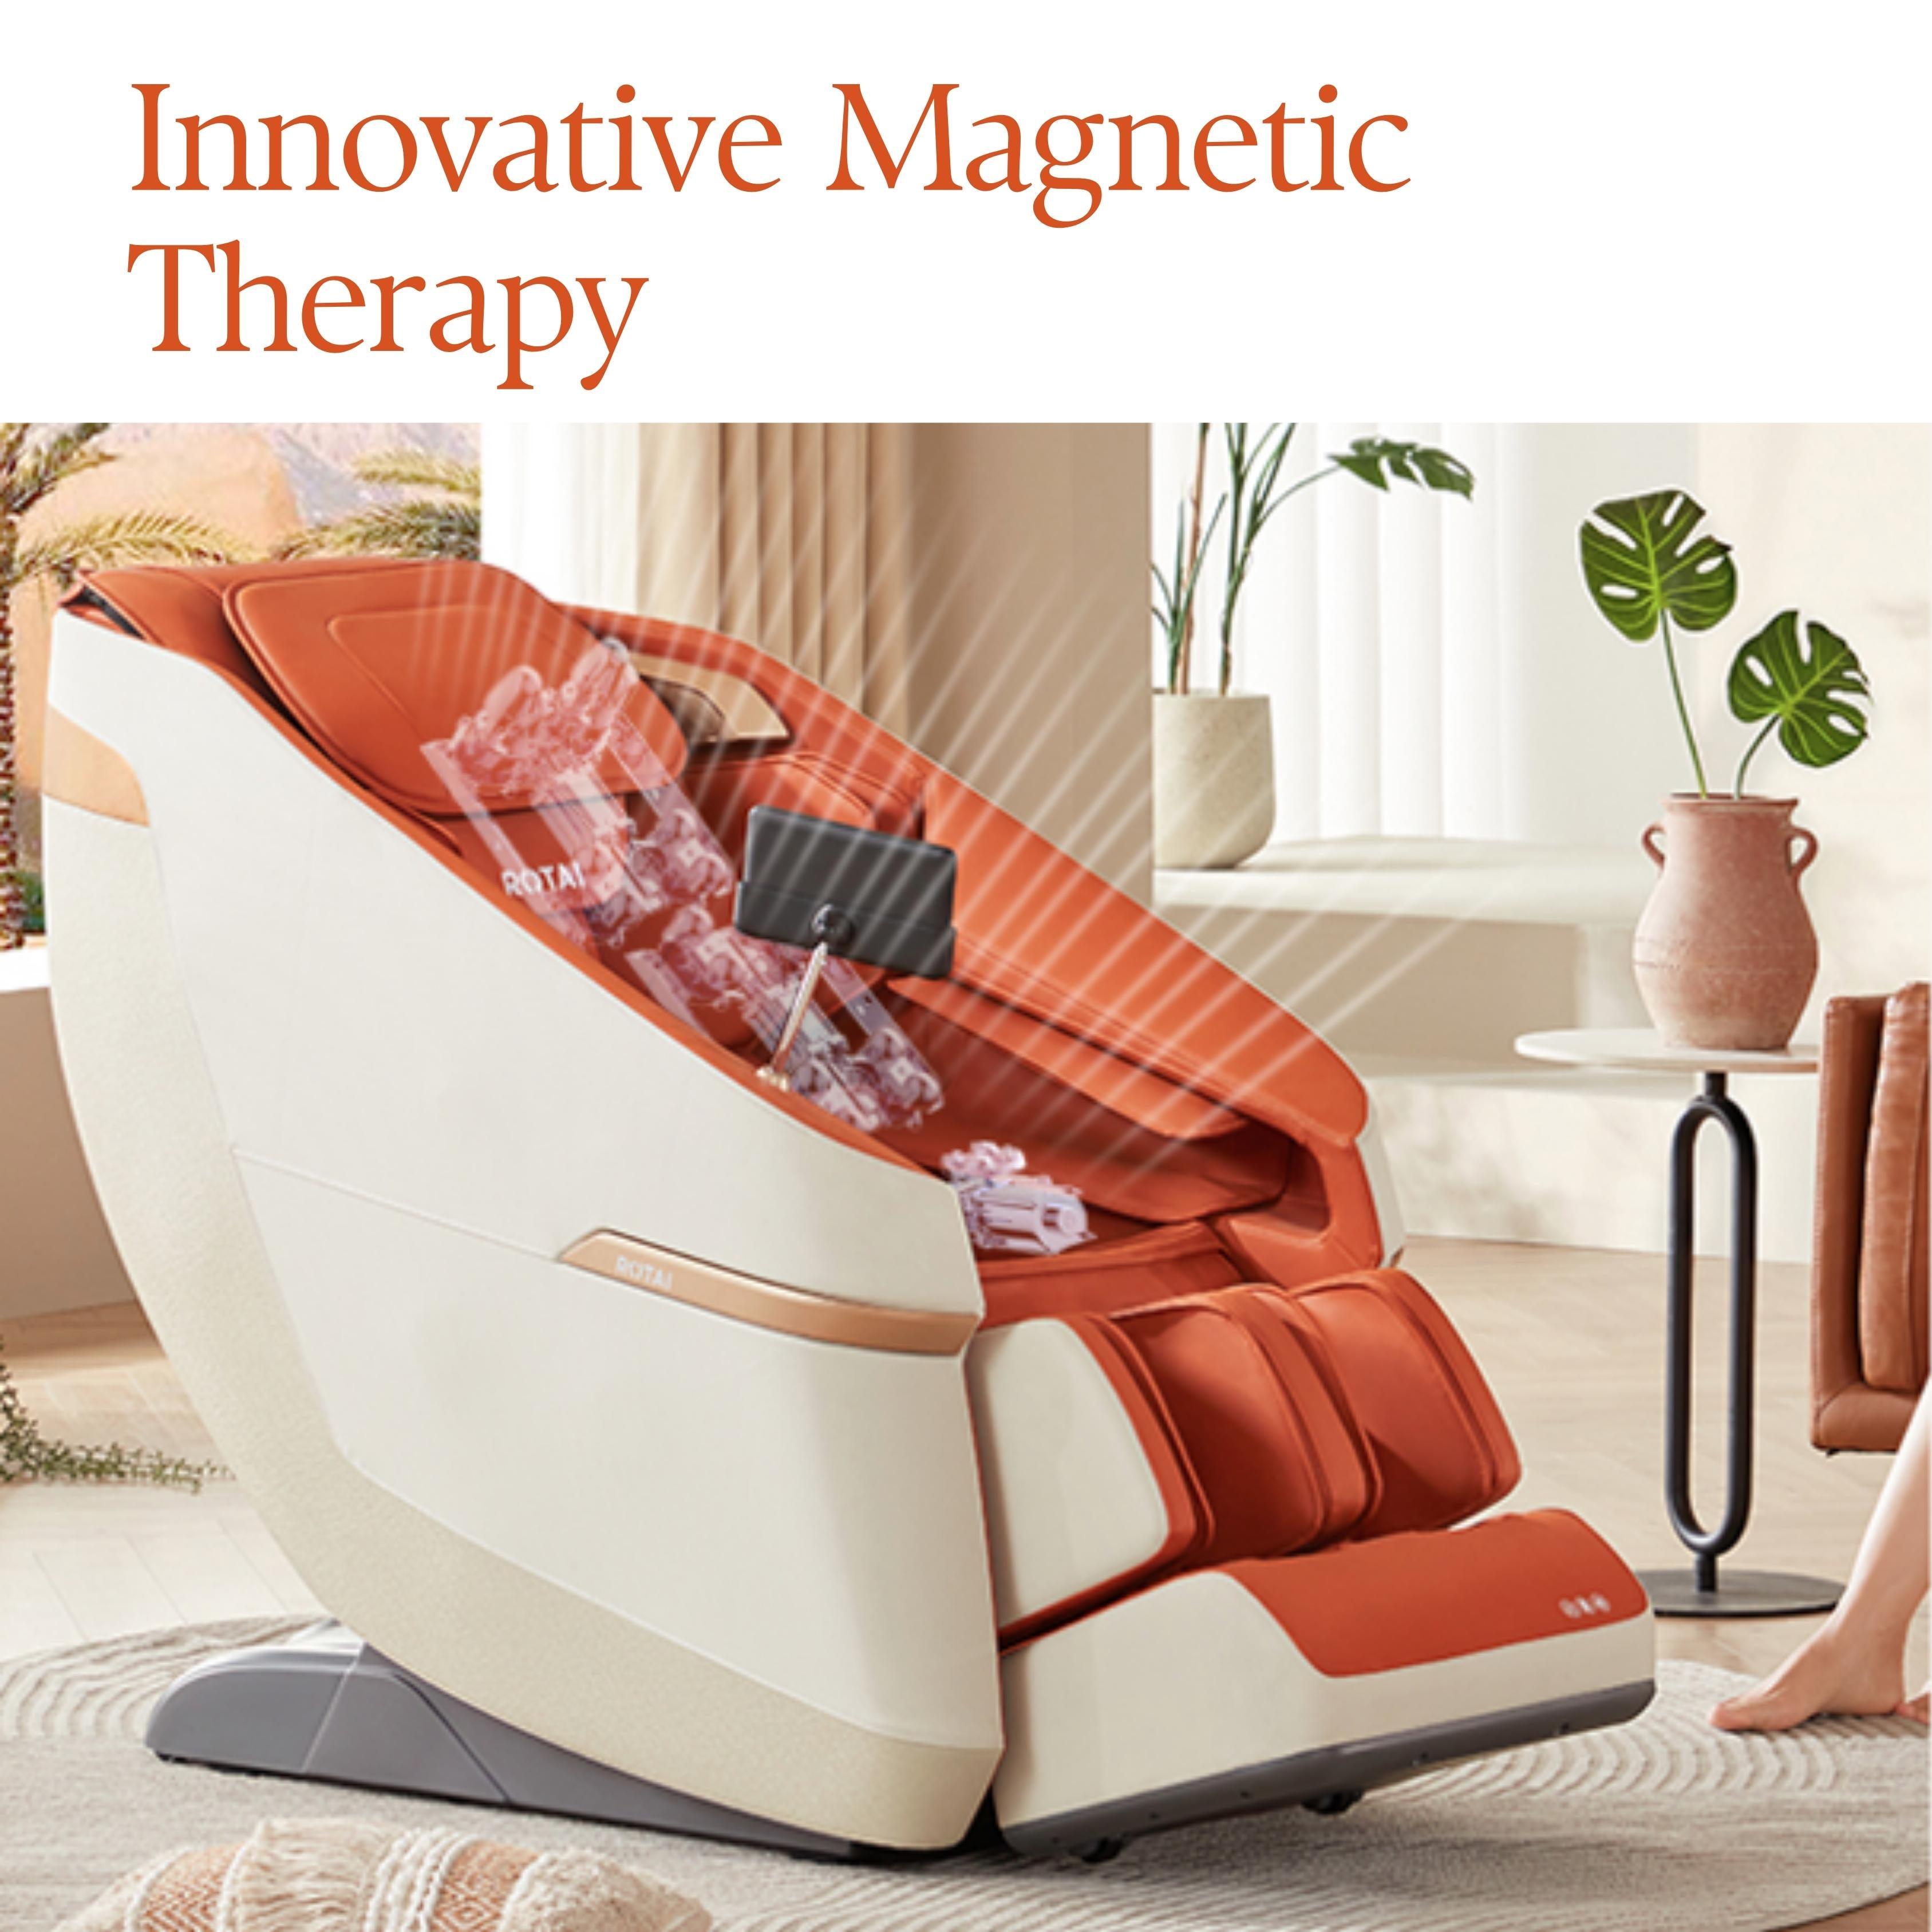 Orange Jimny Massage Chair with innovative magnetic therapy, best massage chair UAE, massage chair Dubai, relaxation seat in modern room.